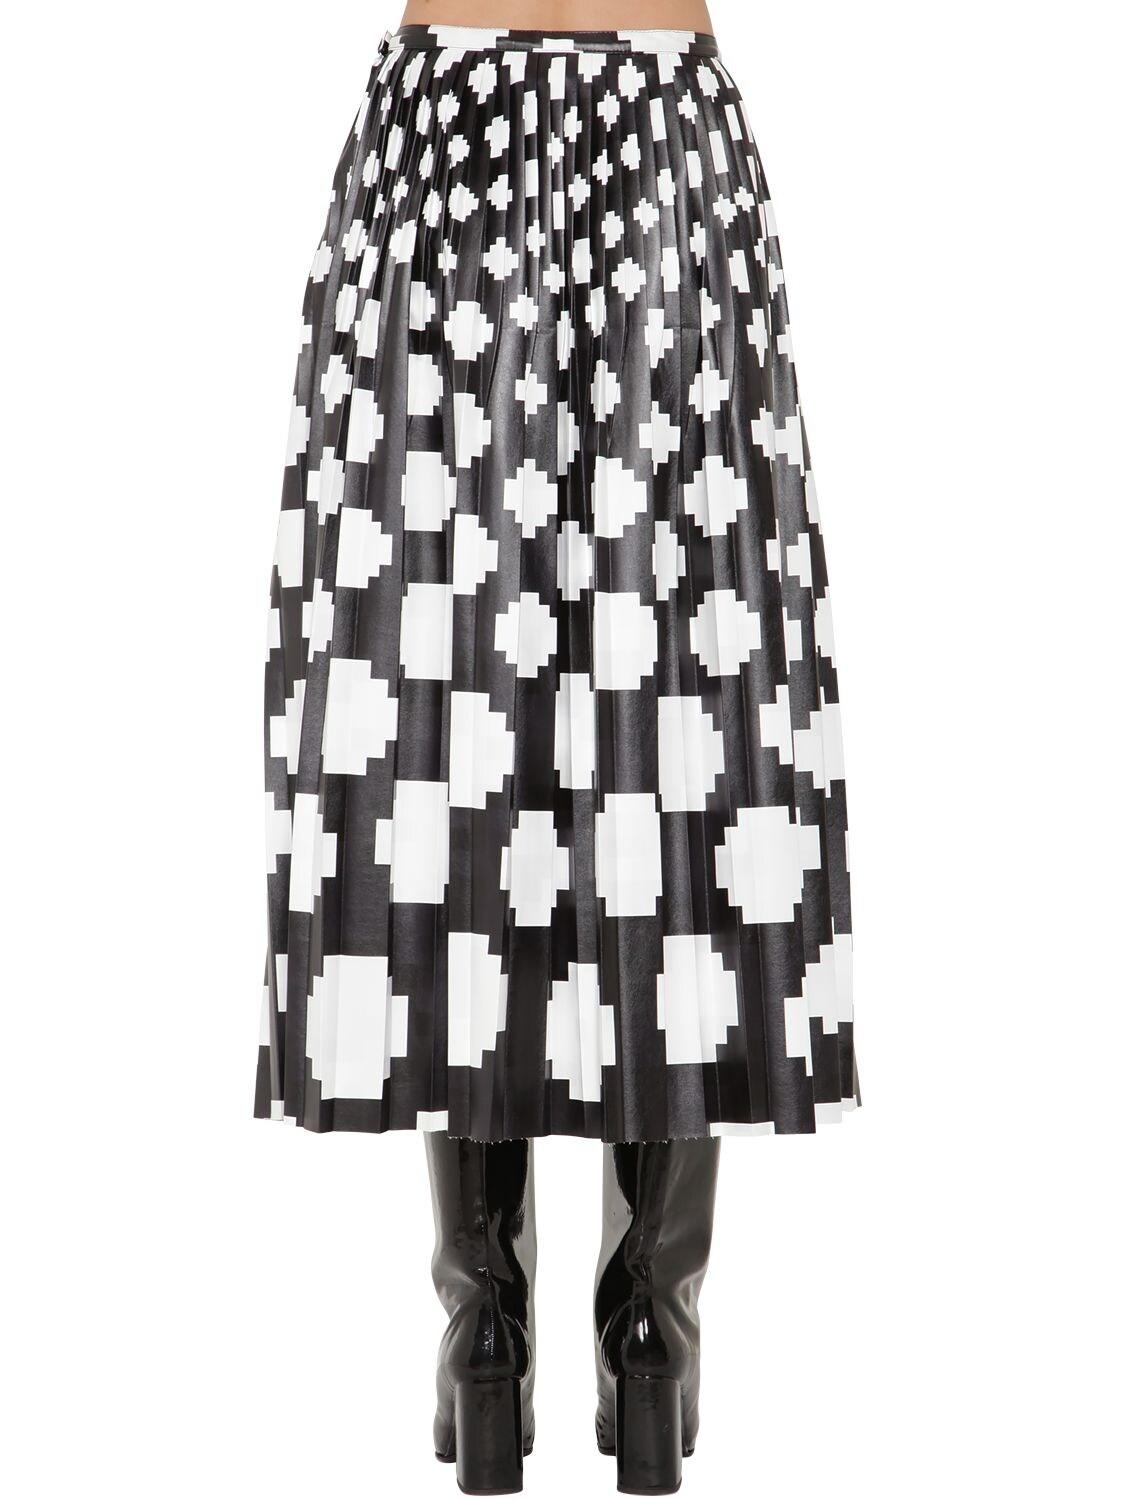 Marni Geometric Print Skirt in Black/White (Black) - Save 63% | Lyst